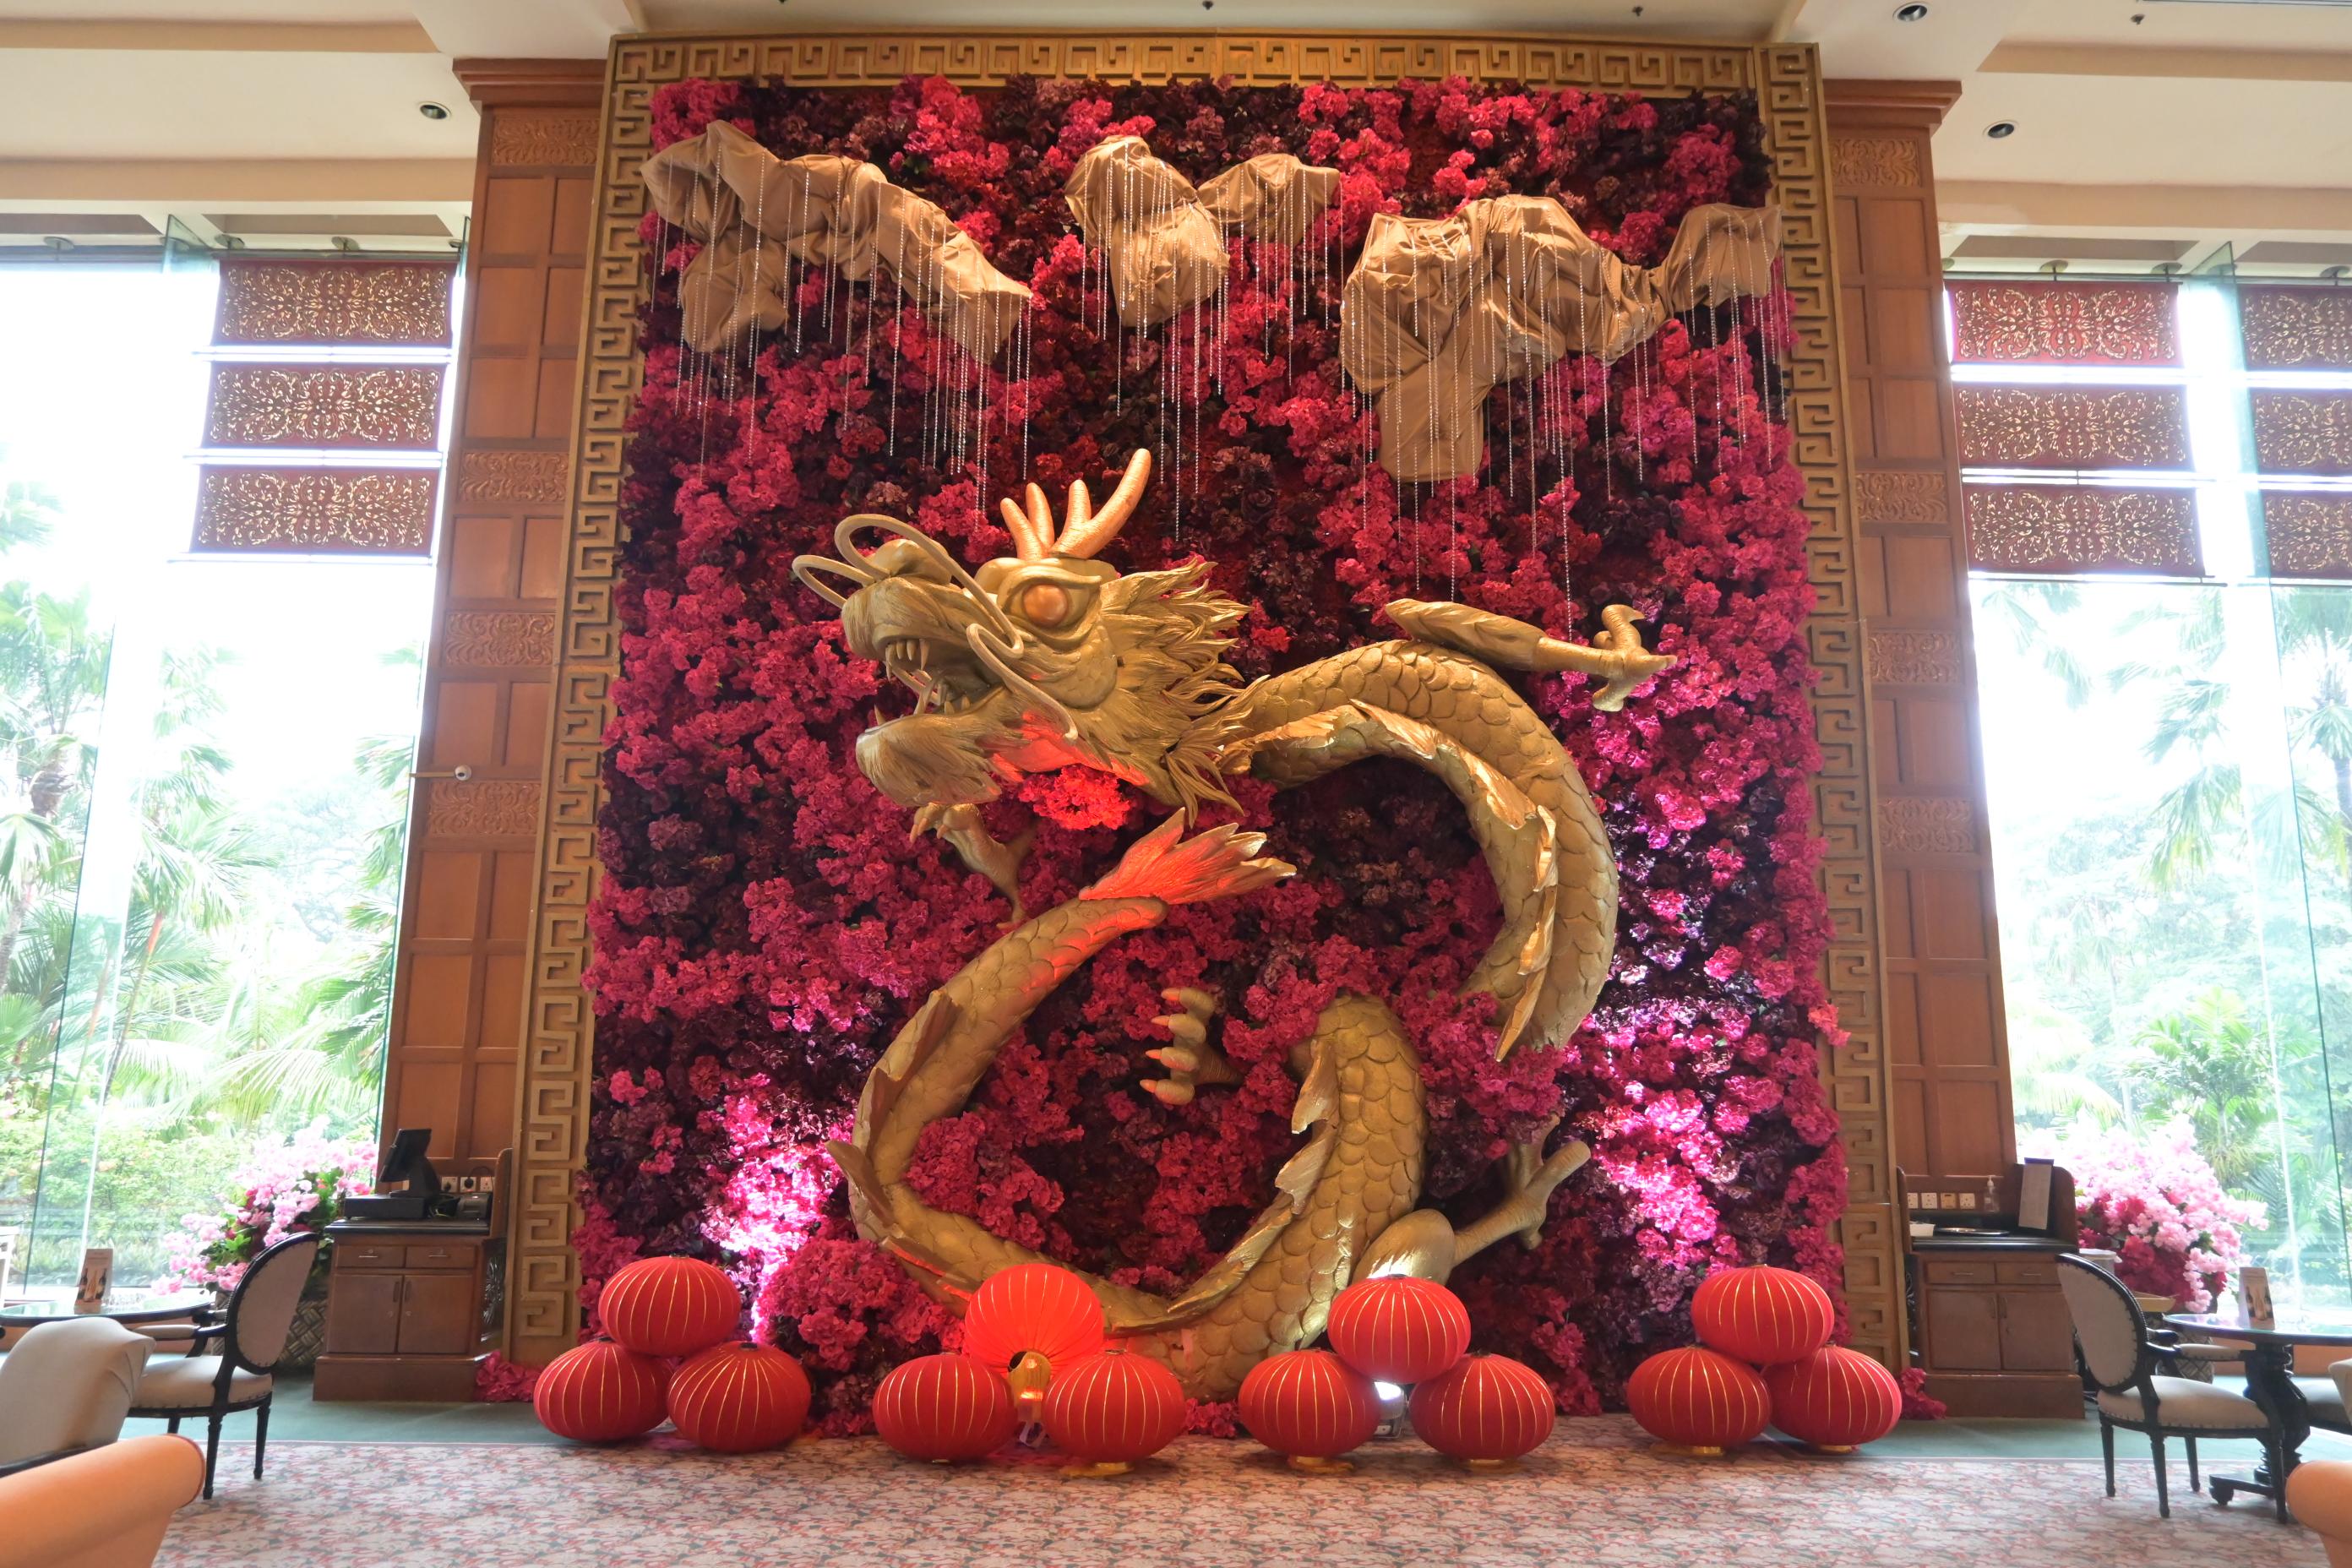 Celebrate the Year of the Wood Dragon at Shangri-La Surabaya